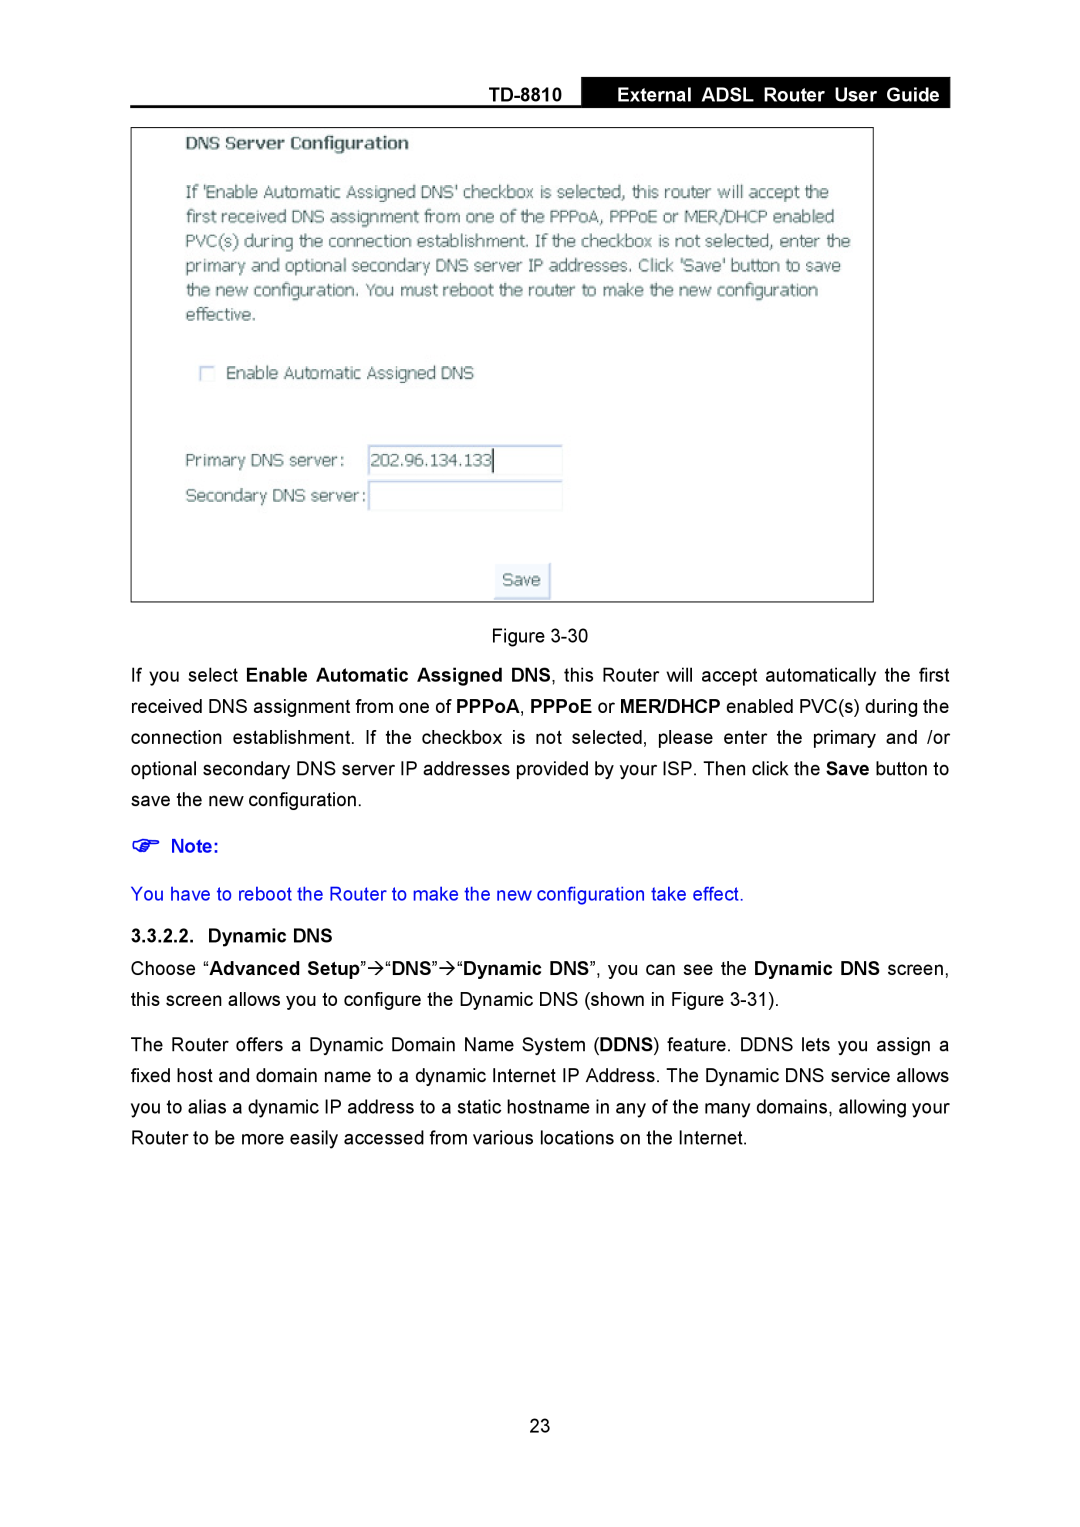 TP-Link TD-8810B manual External ADSL Router User Guide, Dynamic DNS 